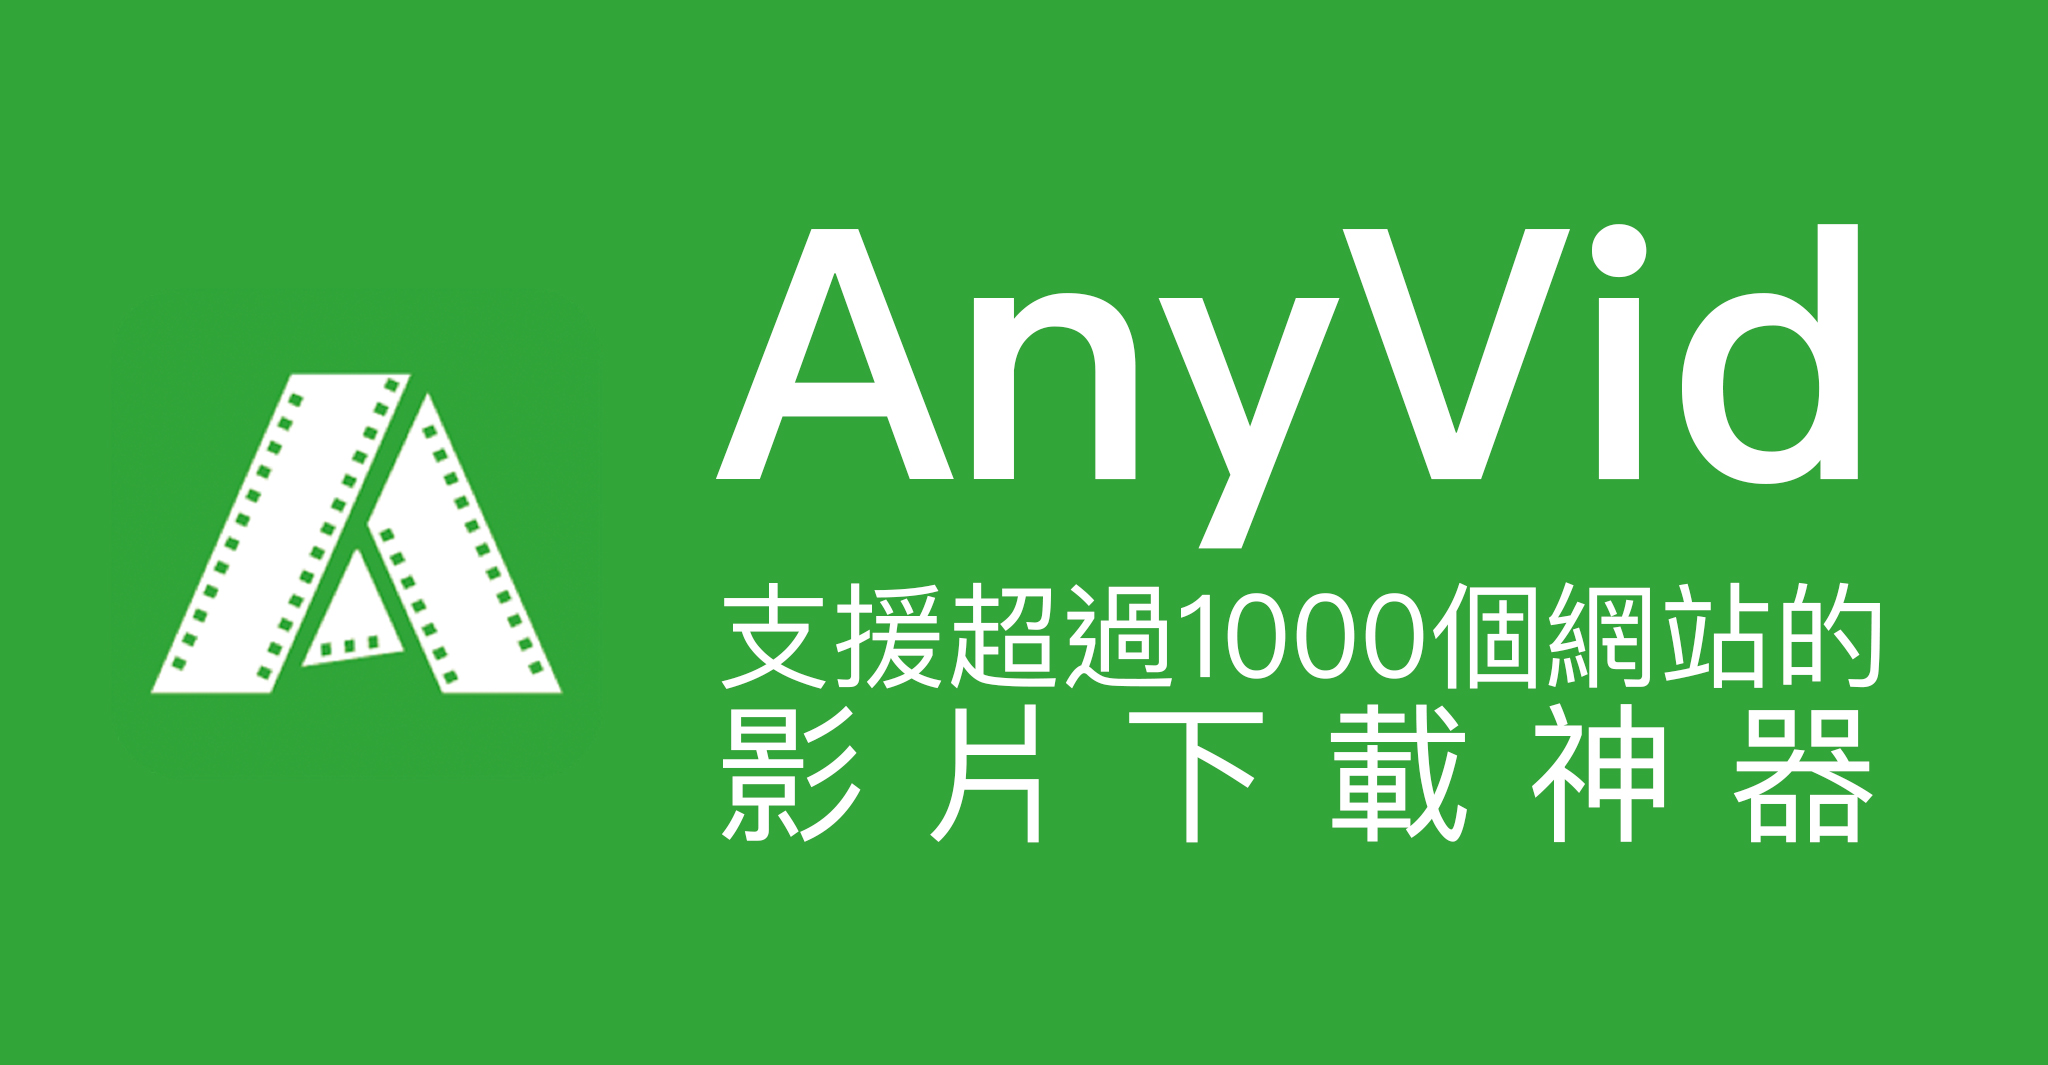 AnyVid 支援超過1000個網站的 影片下載神器